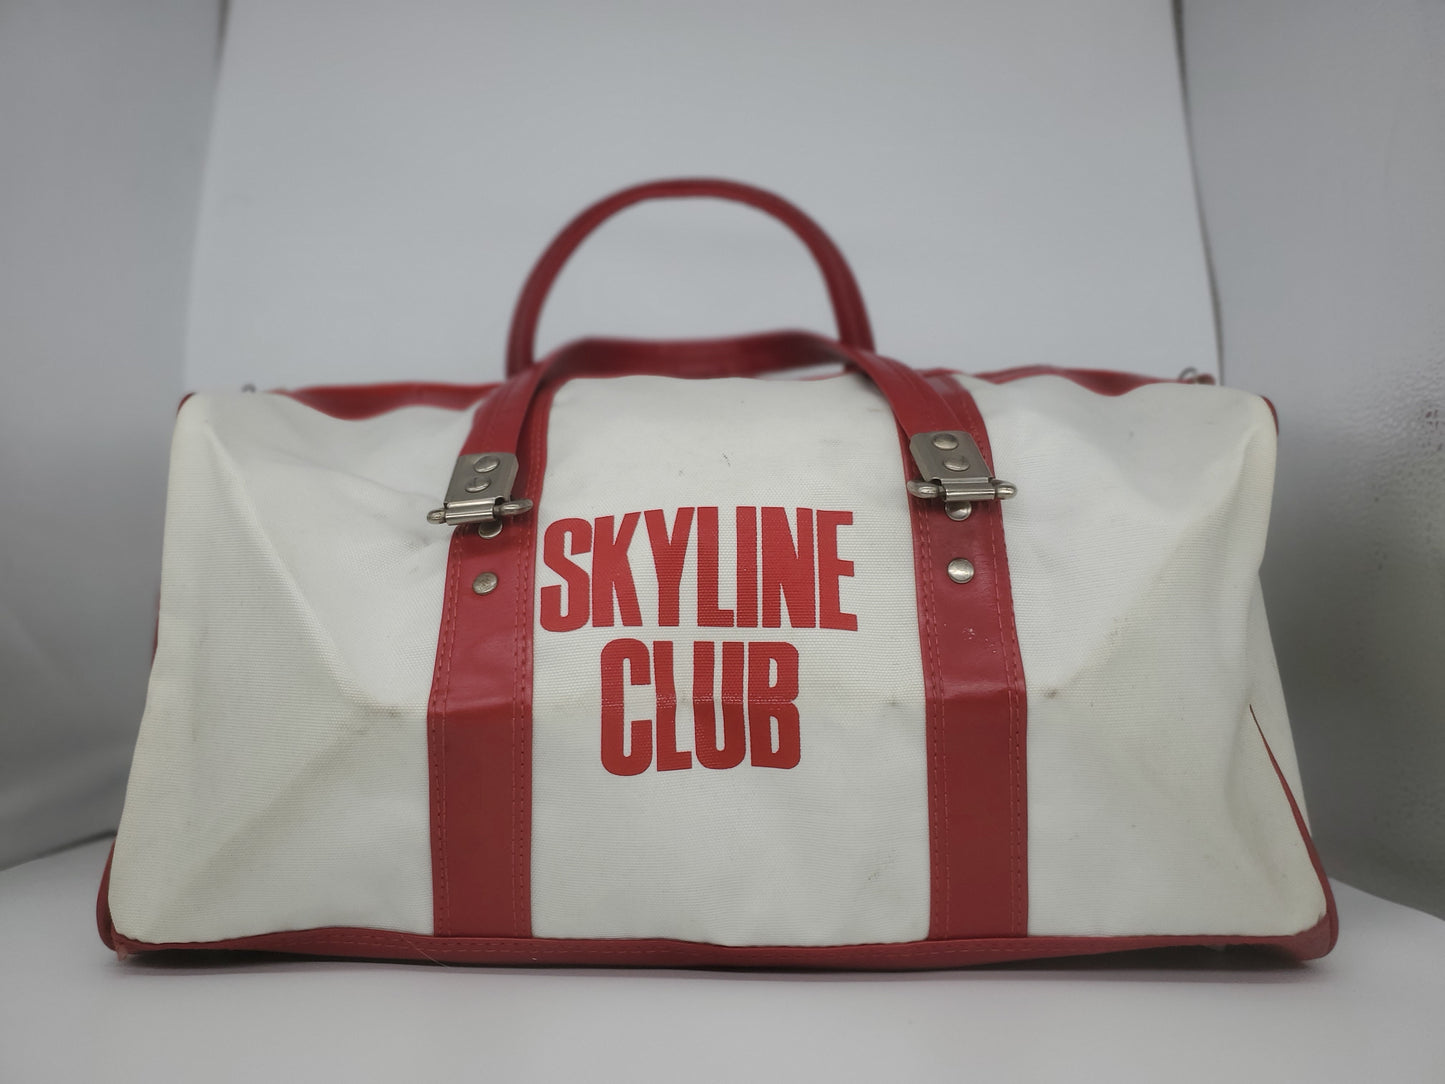 Skyline Club Duffle Bag